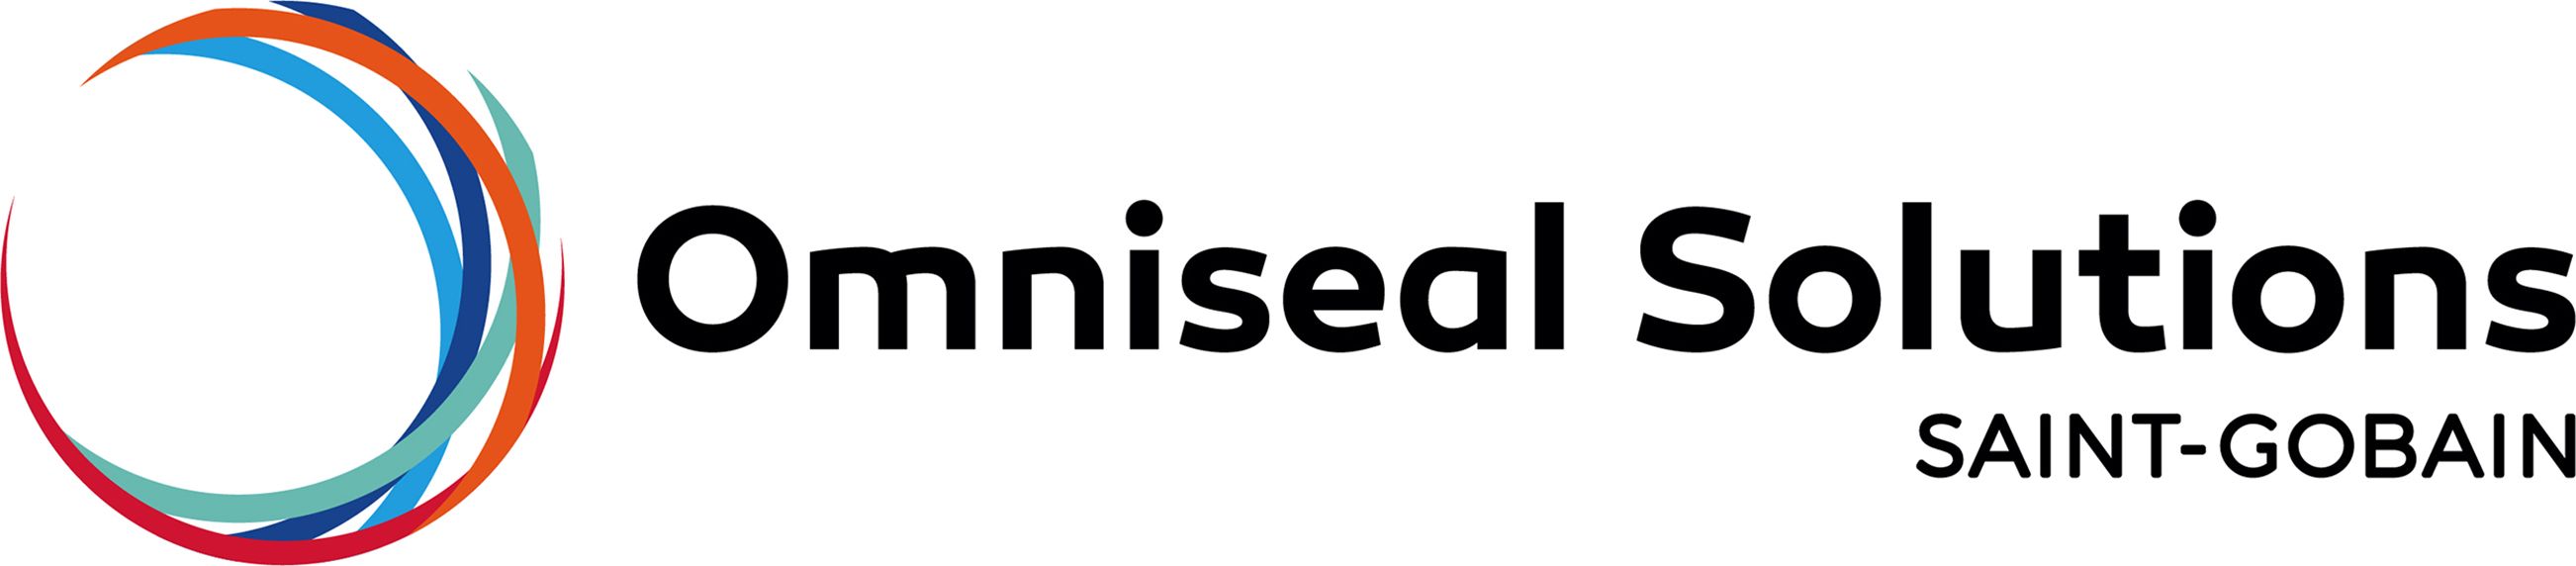 Omniseal Solutions Logo